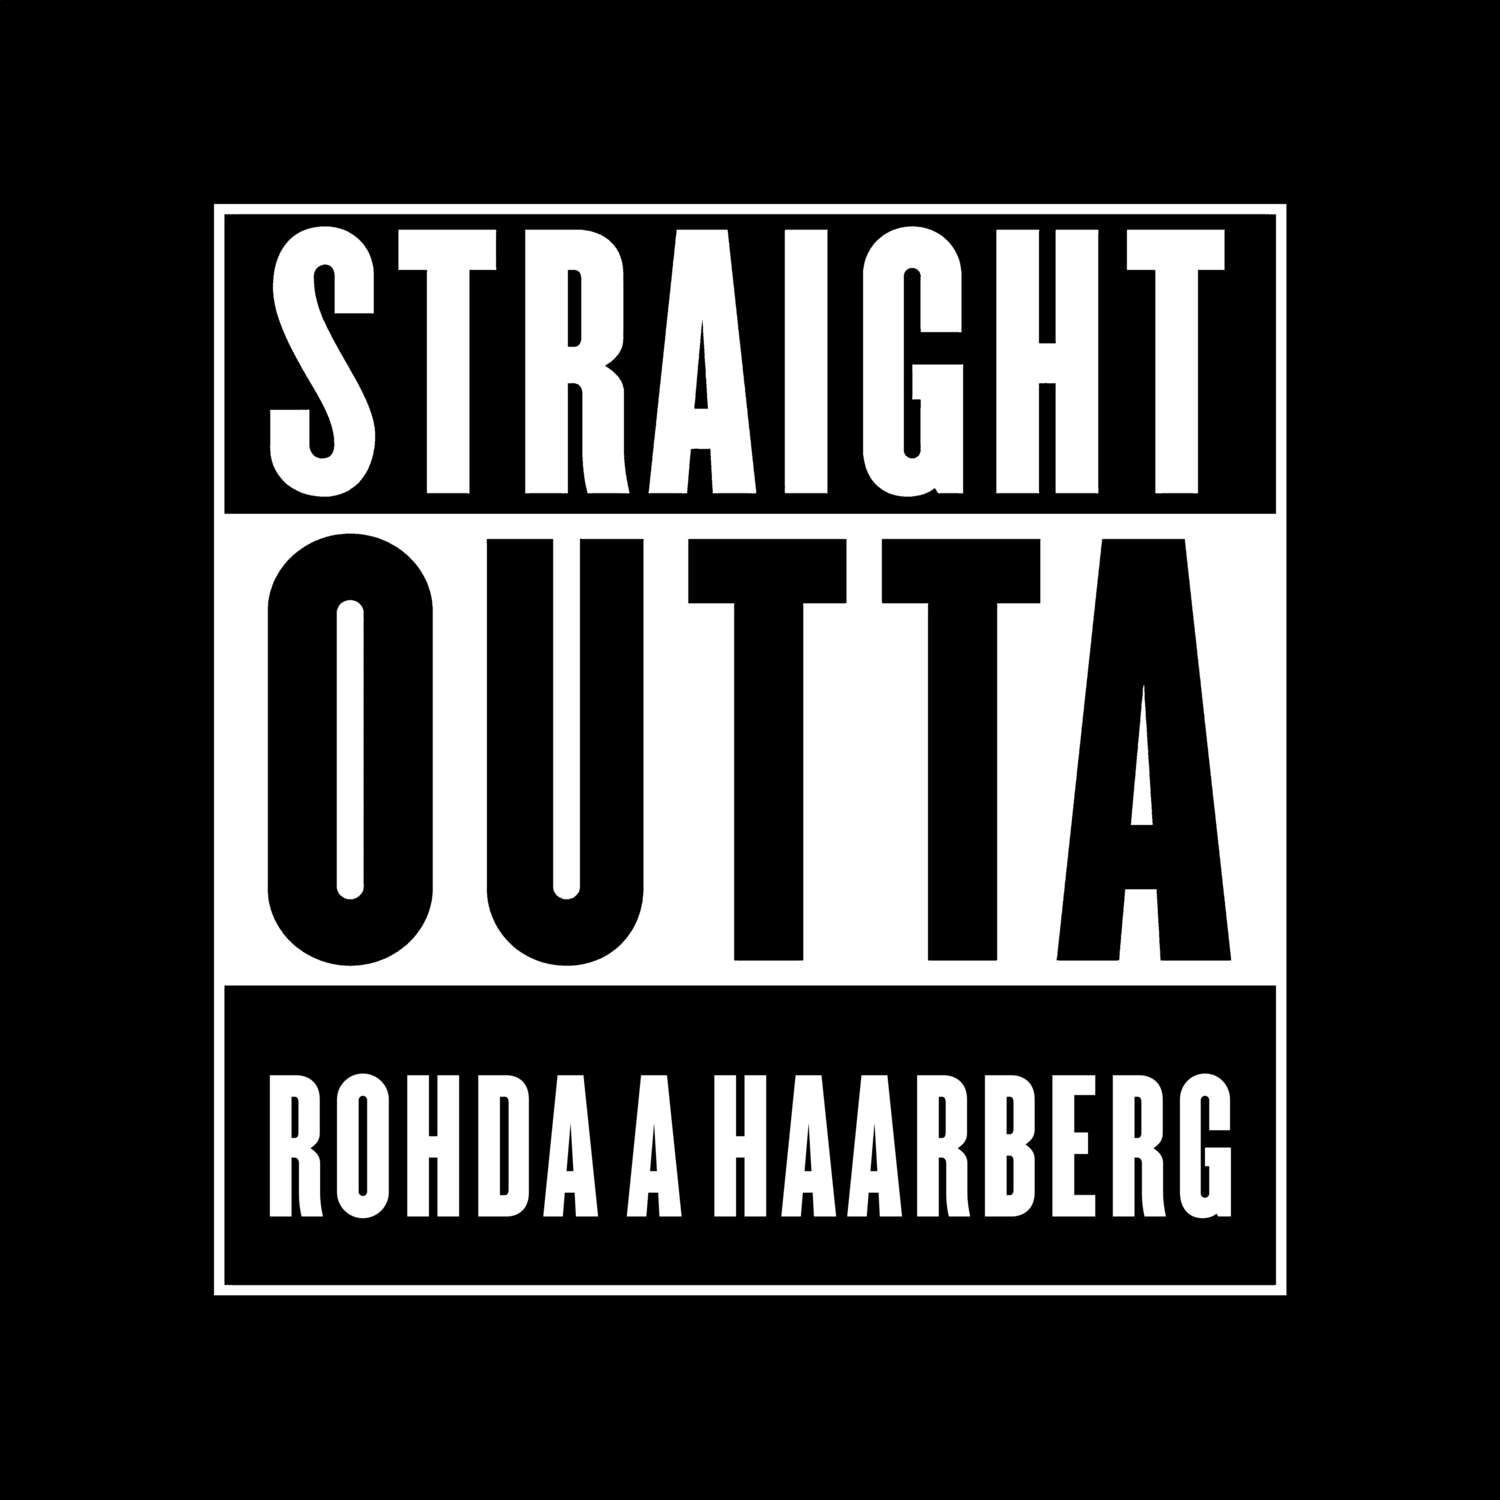 Rohda a Haarberg T-Shirt »Straight Outta«